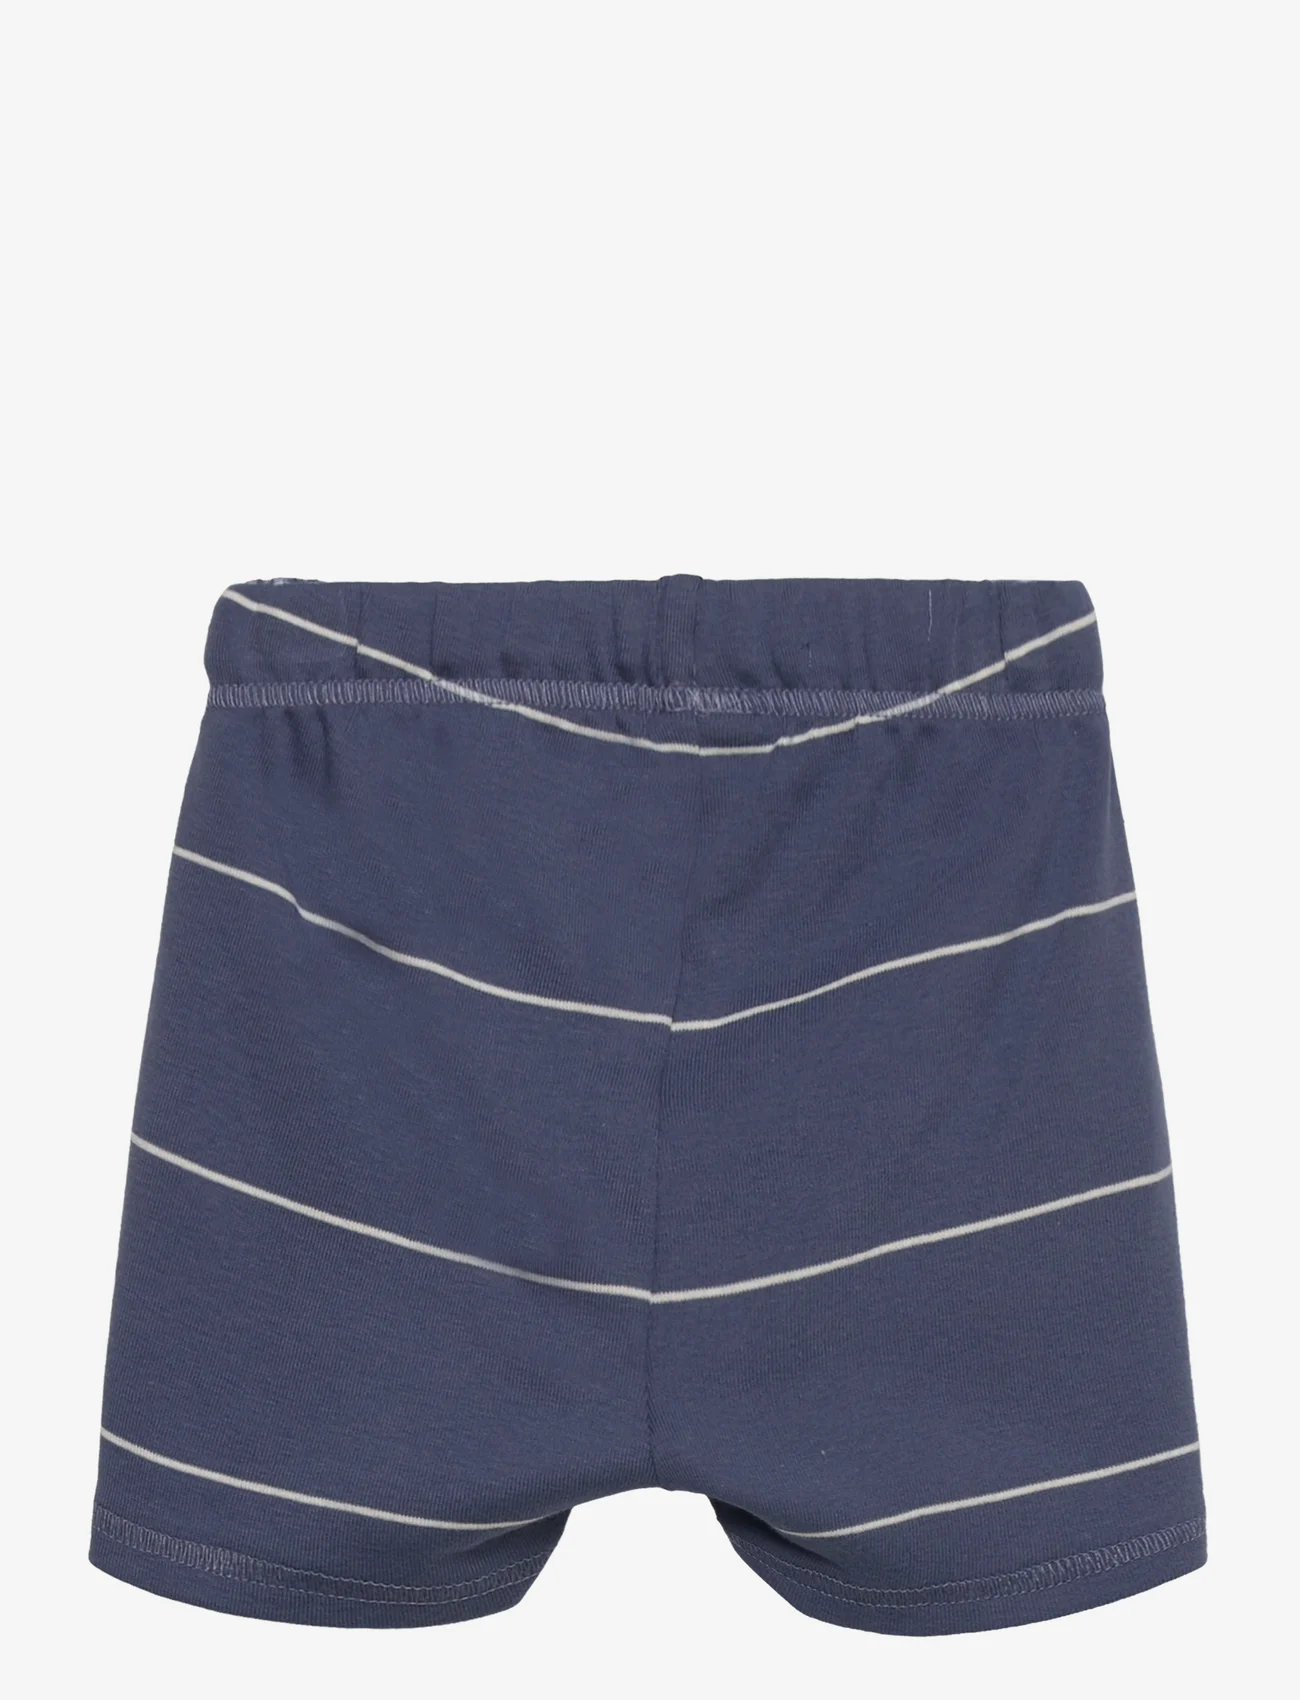 Müsli by Green Cotton - Stripe rib shorts baby - indigo - 1